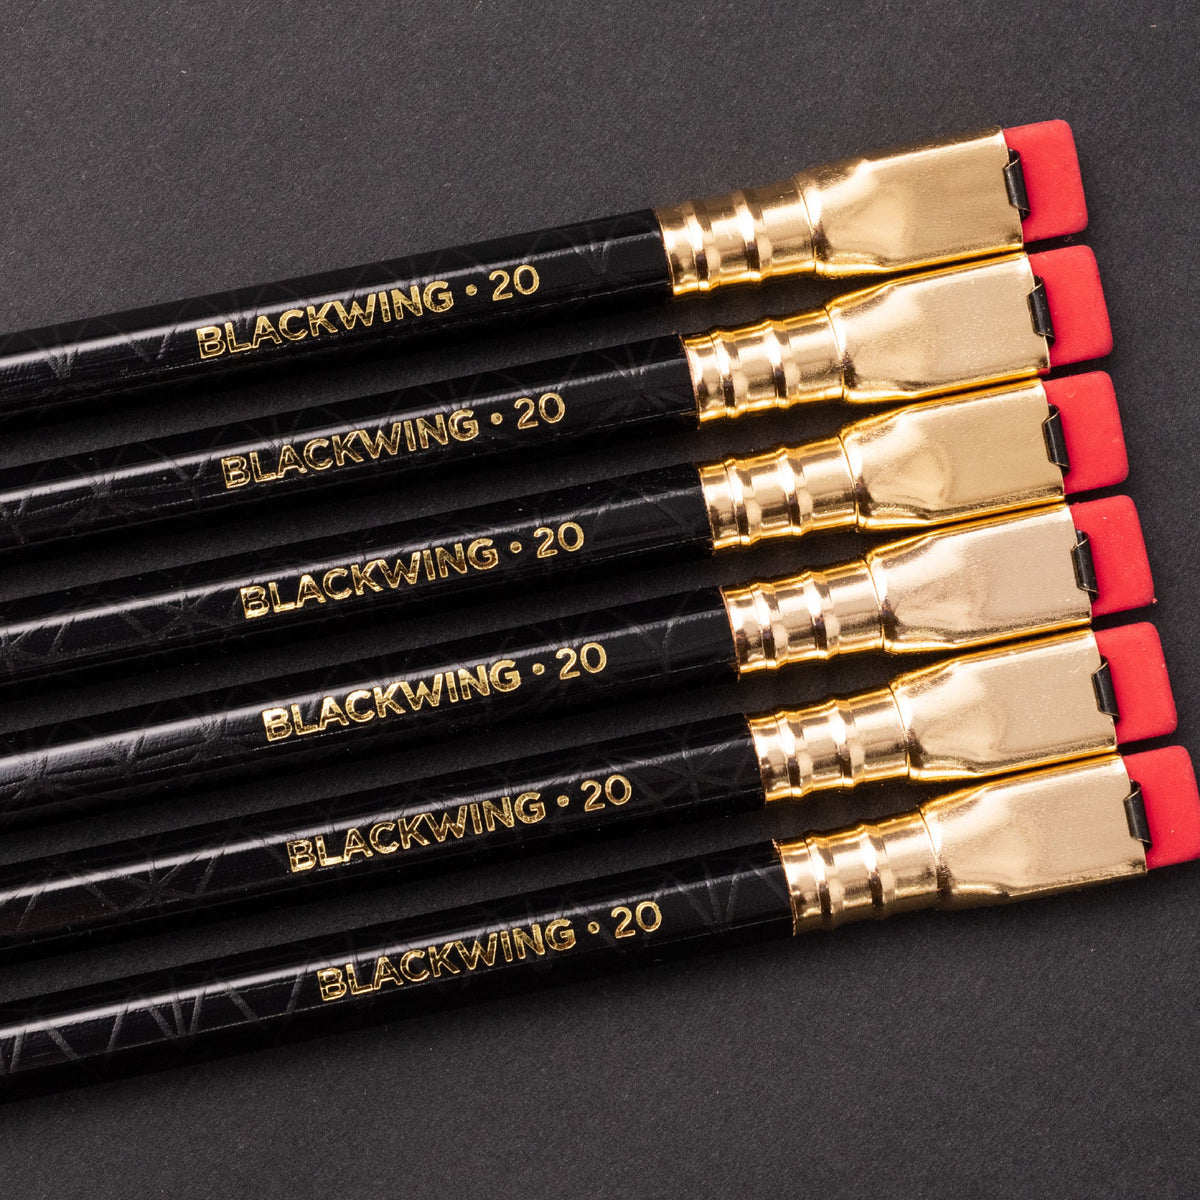 Blackwing - Pencil - Volume 20 - Pack of 2